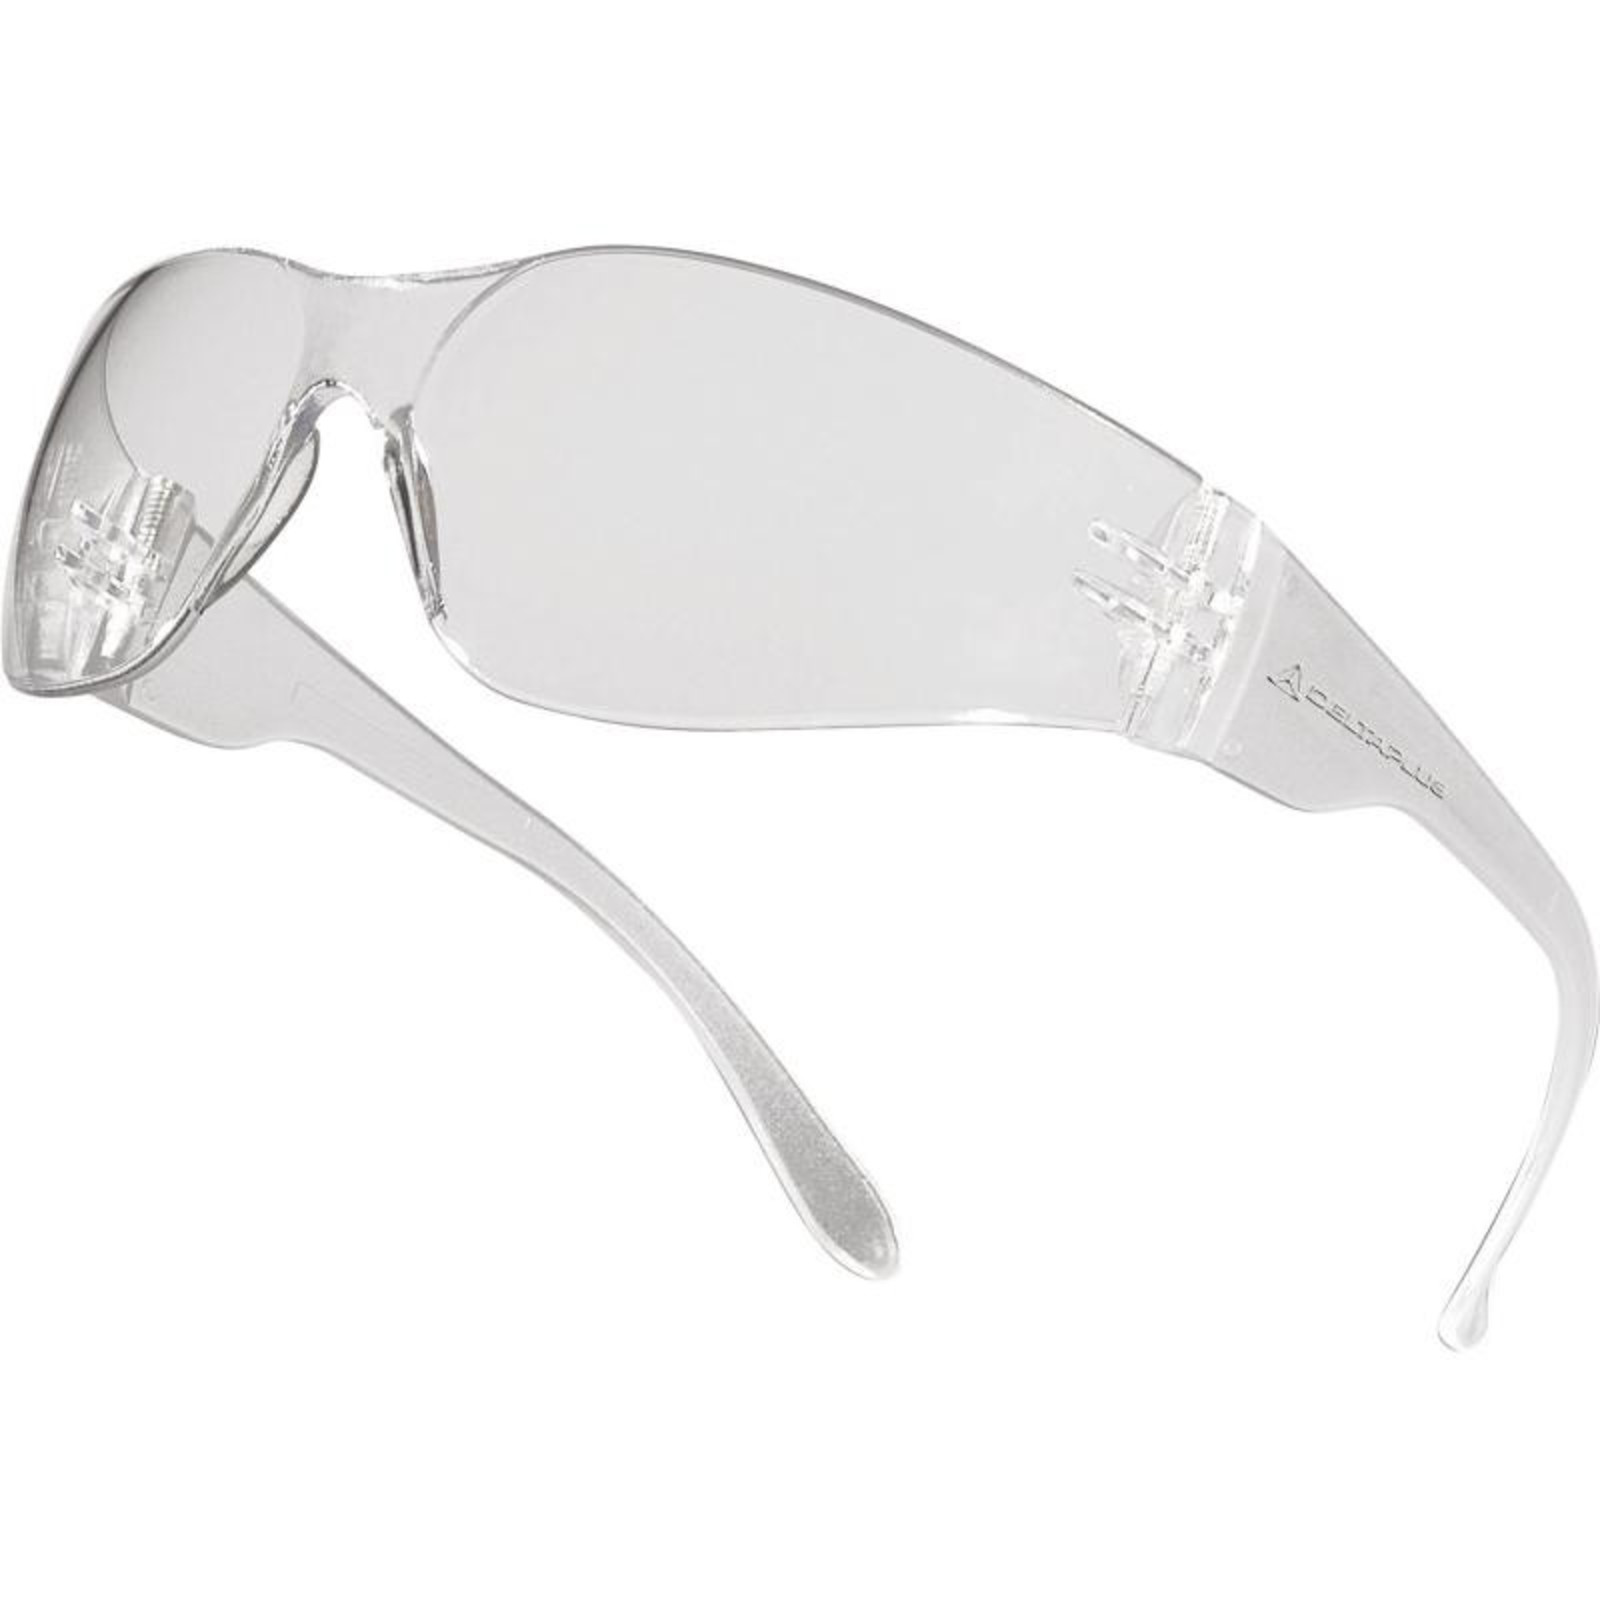 Ochranné okuliare Delta Plus Brava2  - farba: číra